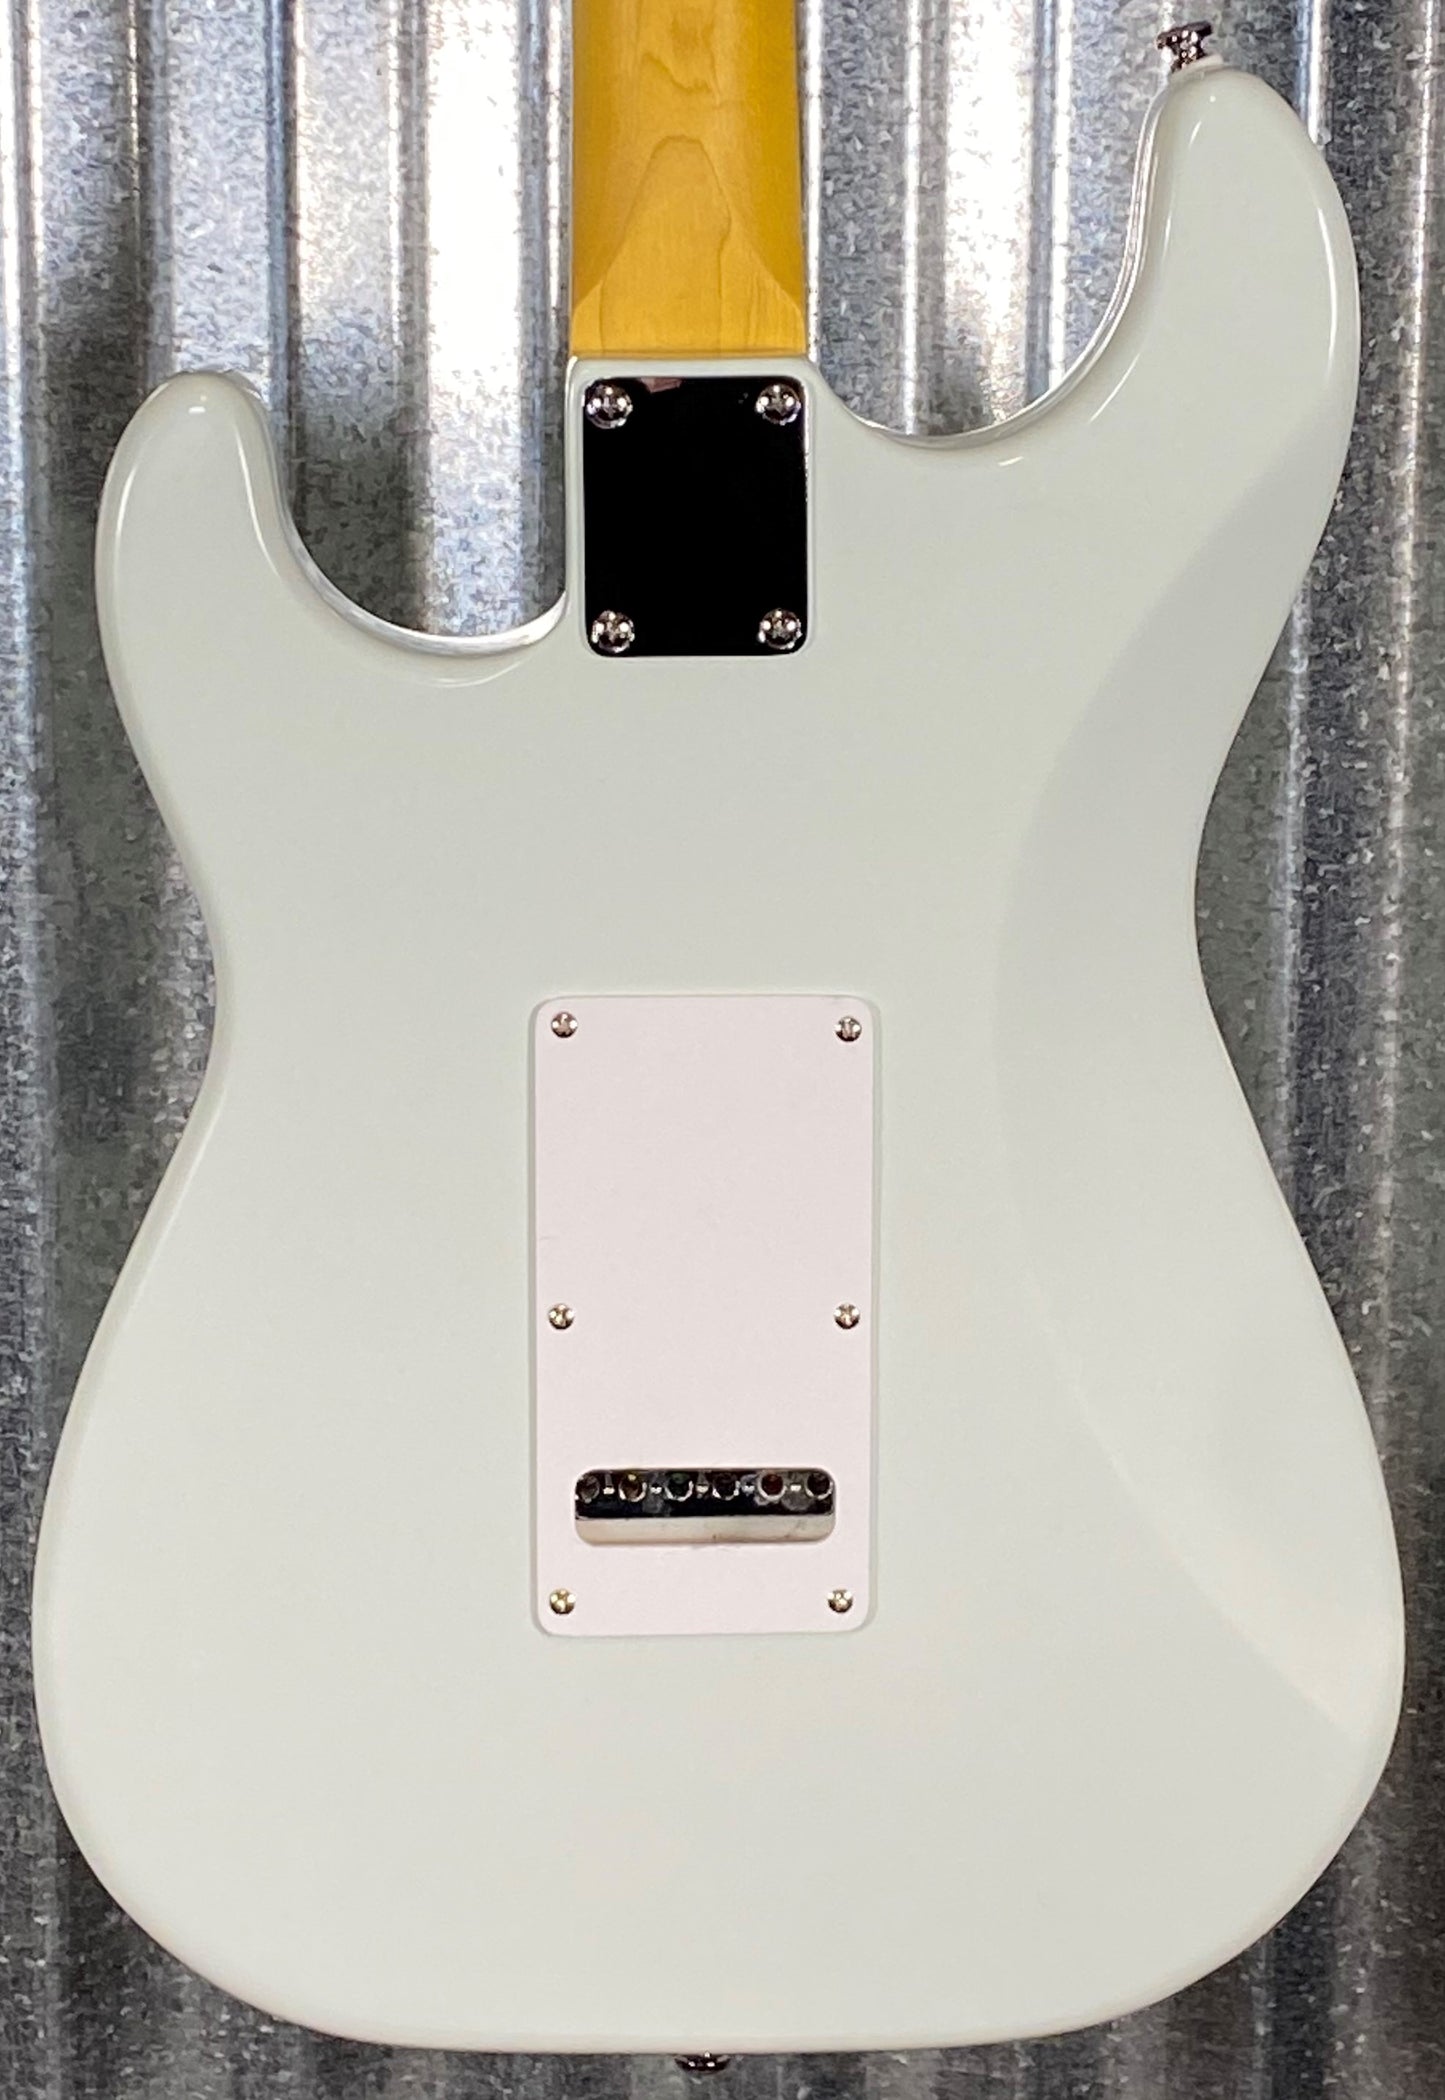 G&L Tribute S-500 Sonic Blue Guitar S500 #6340